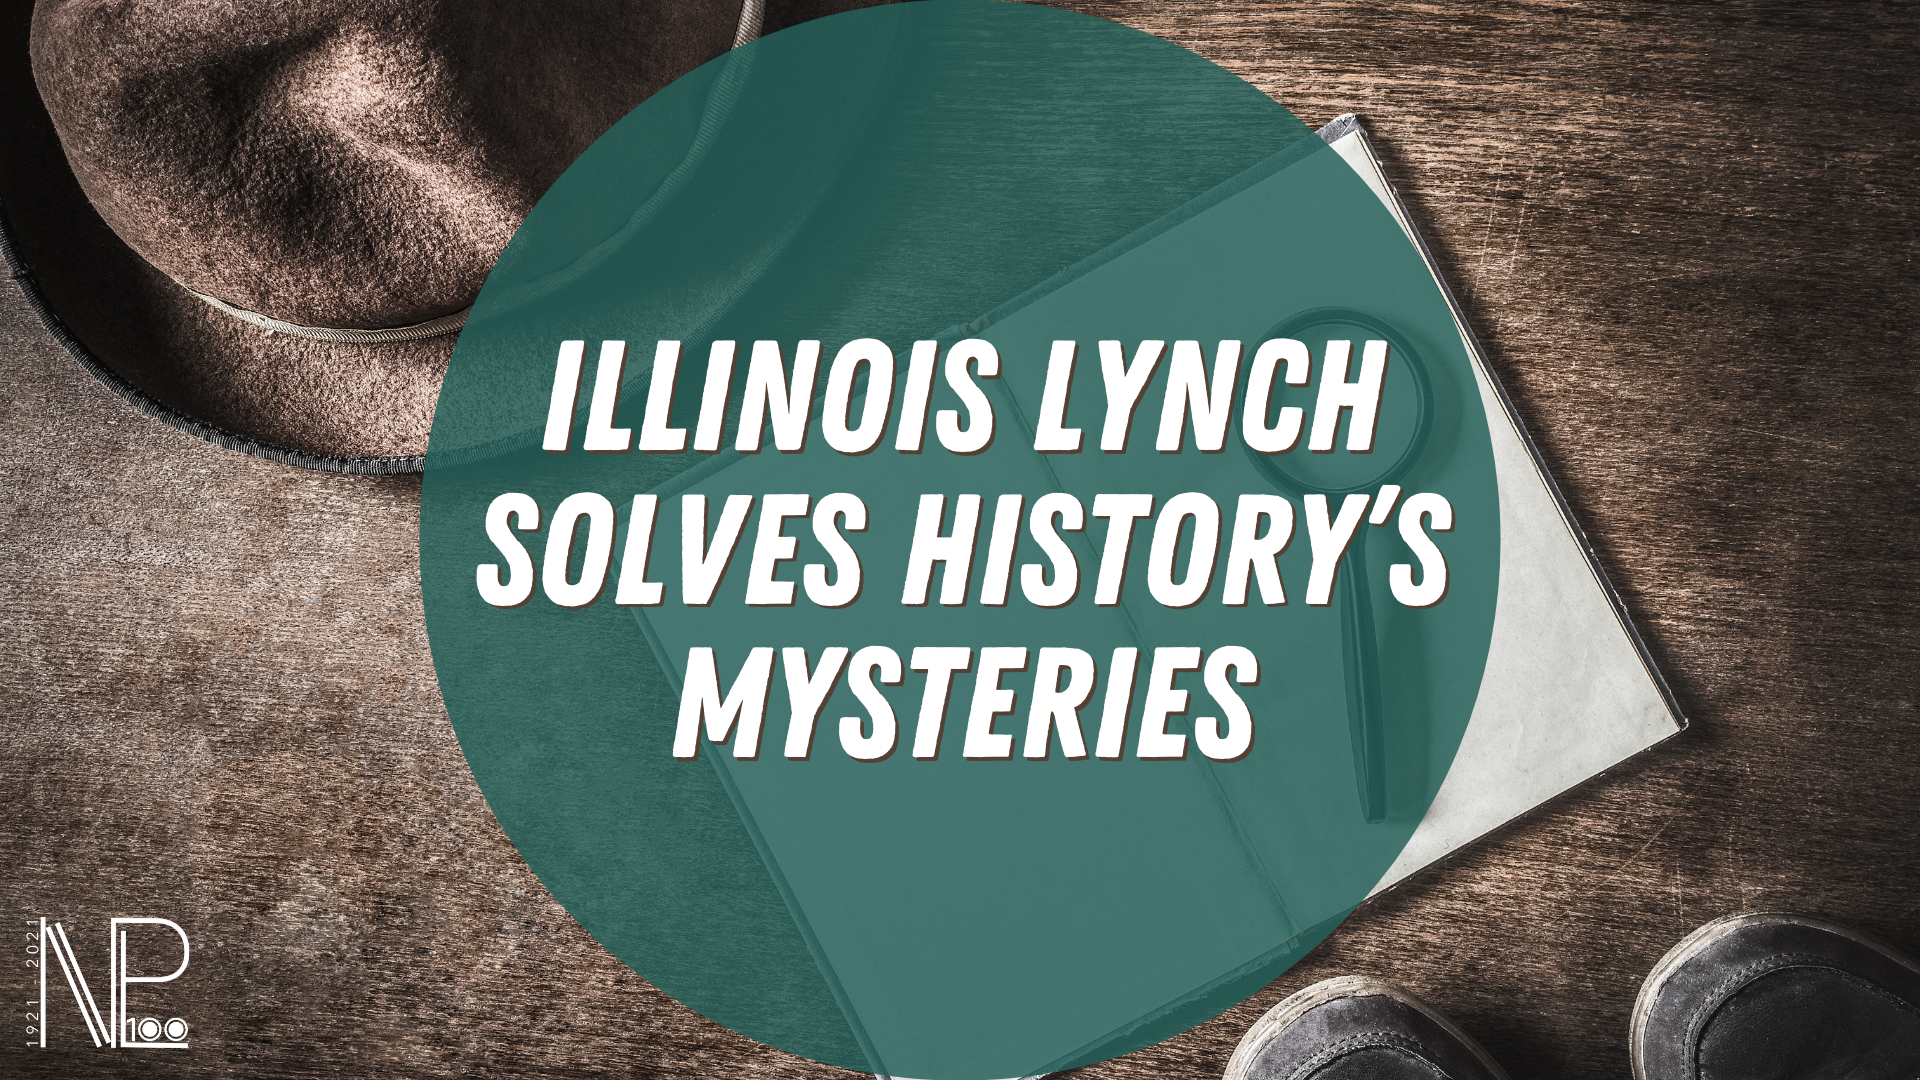 Illinois lynch